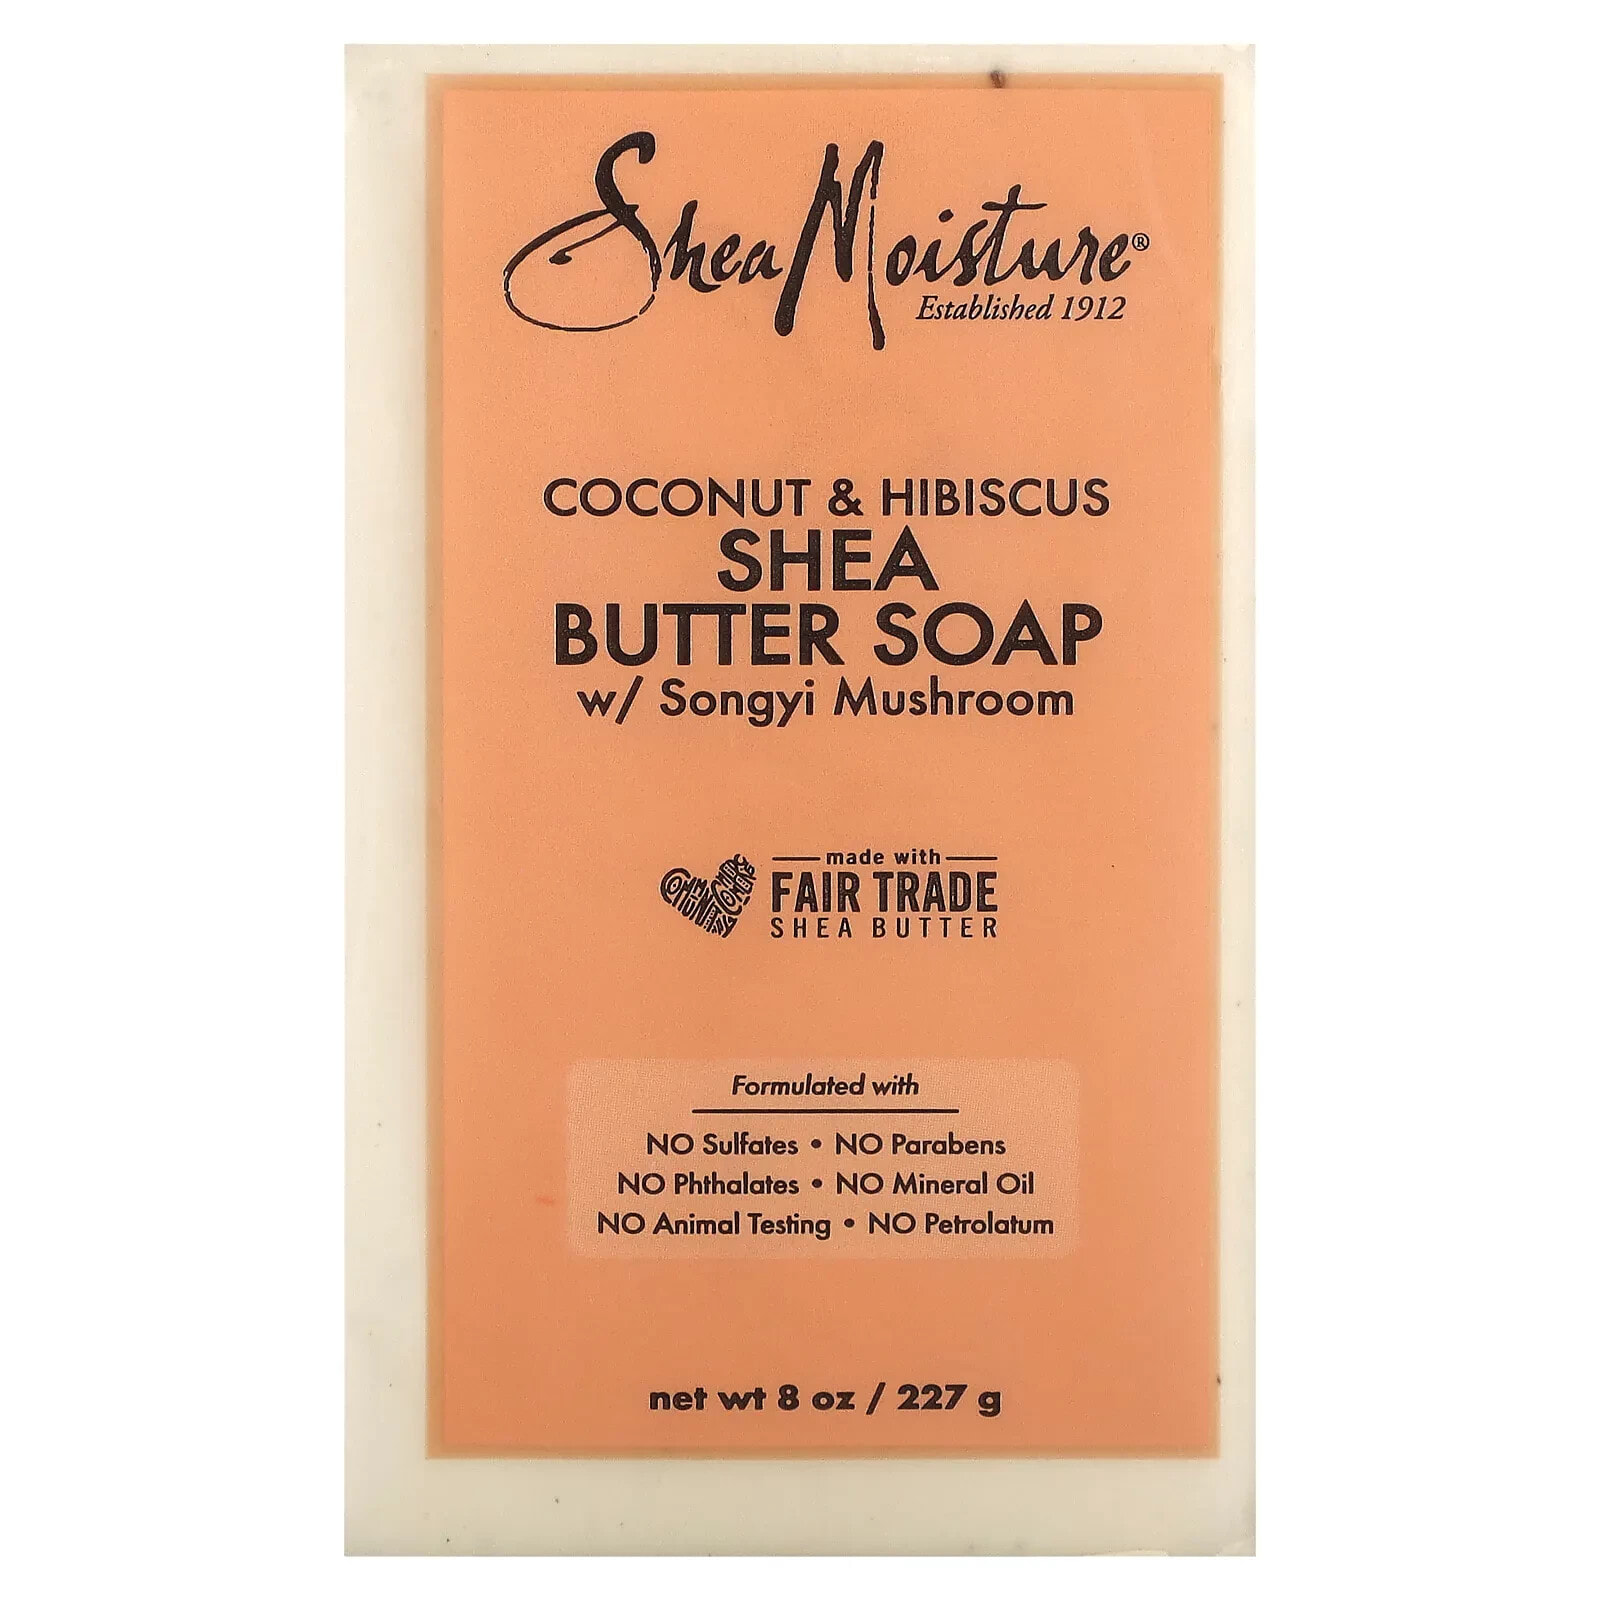 Shea Butter Soap, Coconut & Hibiscus, 8 oz (227 g)